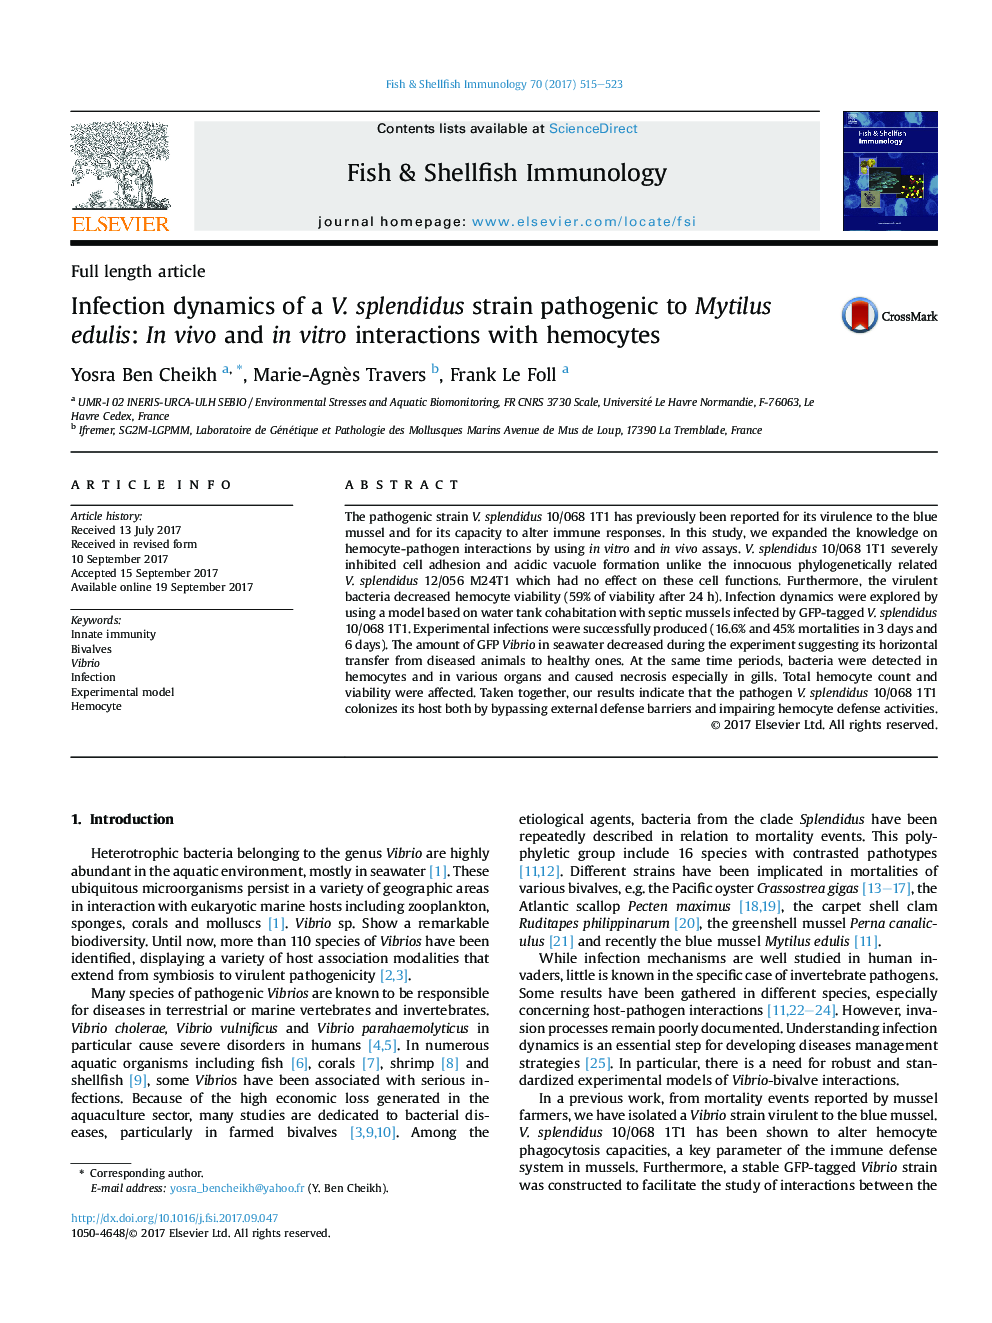 Infection dynamics of a V.Â splendidus strain pathogenic to Mytilus edulis: InÂ vivo and inÂ vitro interactions with hemocytes